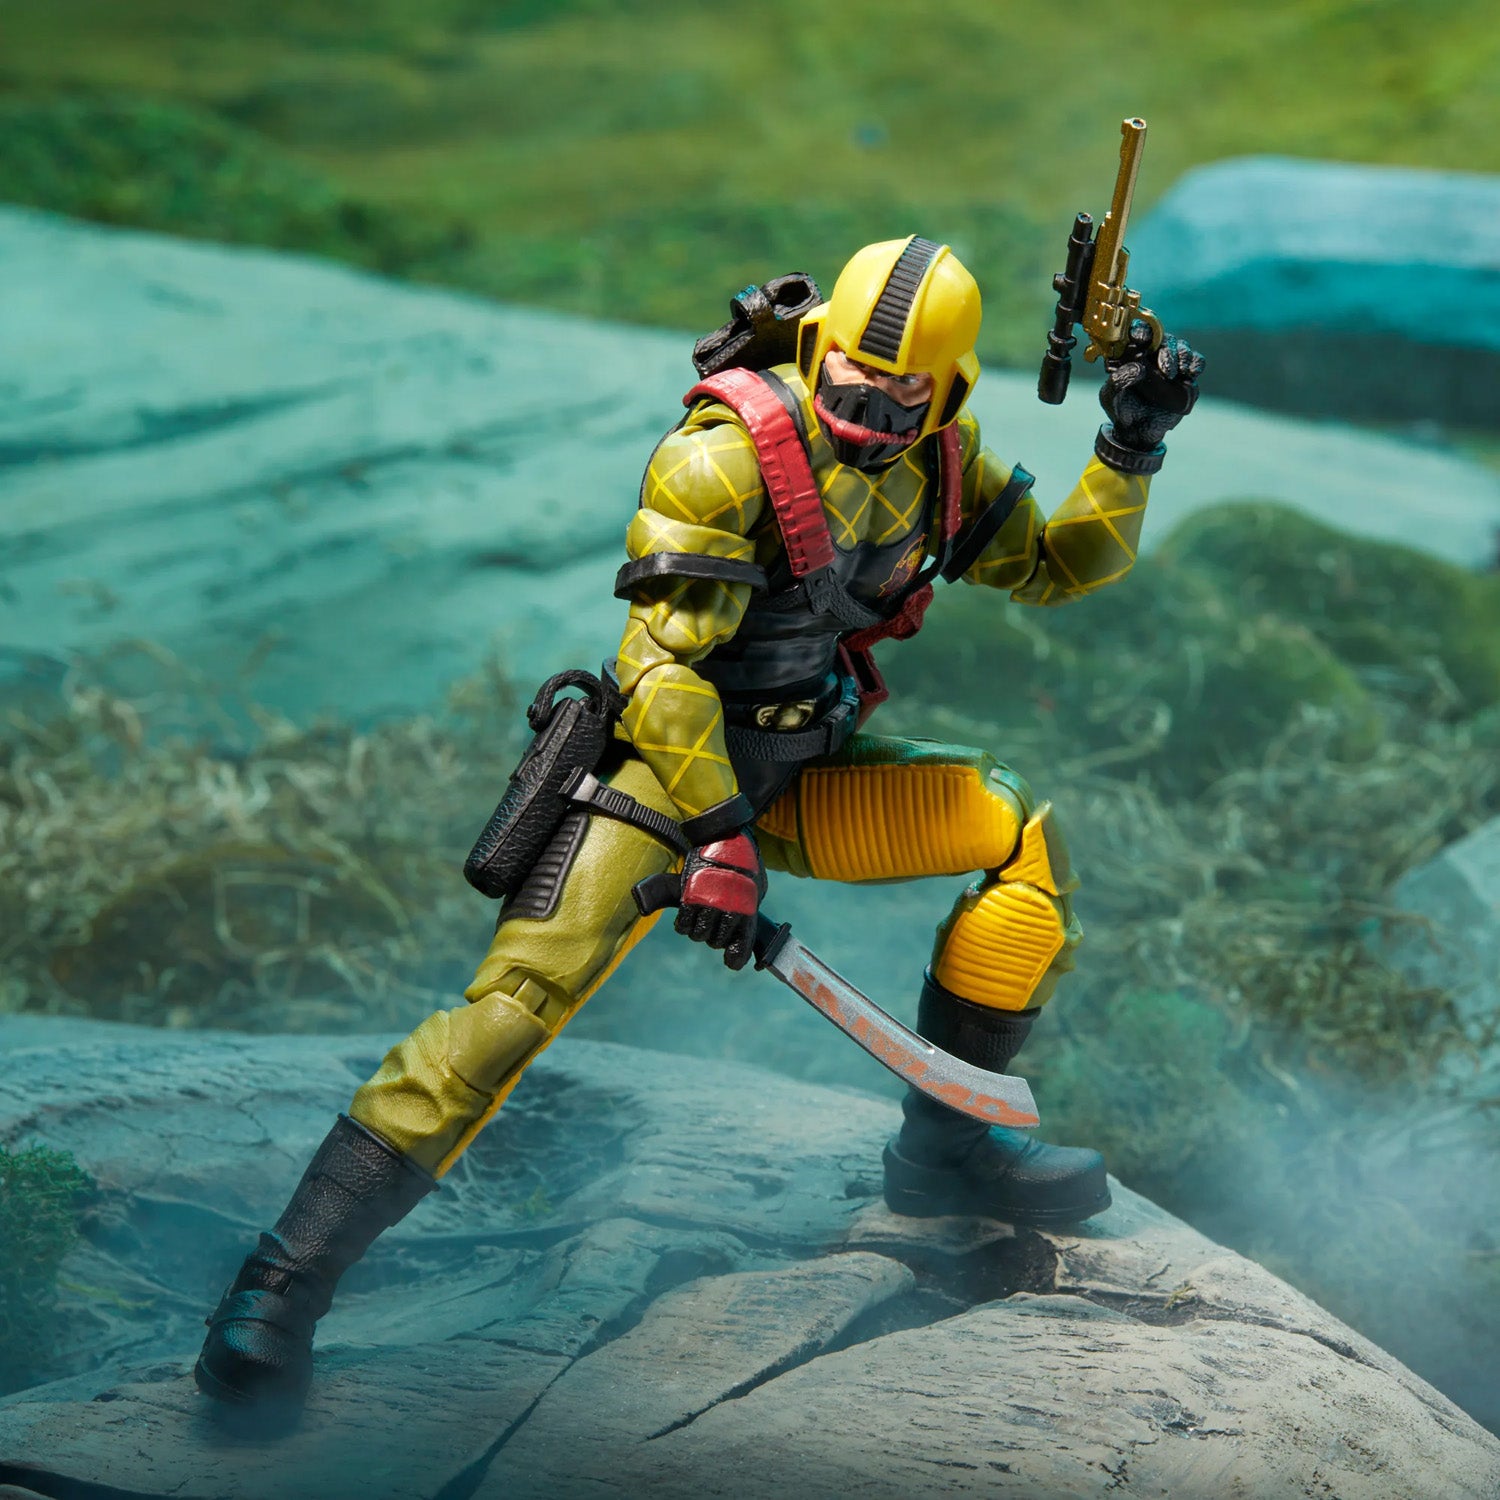 Hasbro - G.I. Joe Classified Series - Python Patrol Cobra Copperhead (6&quot;) - Marvelous Toys